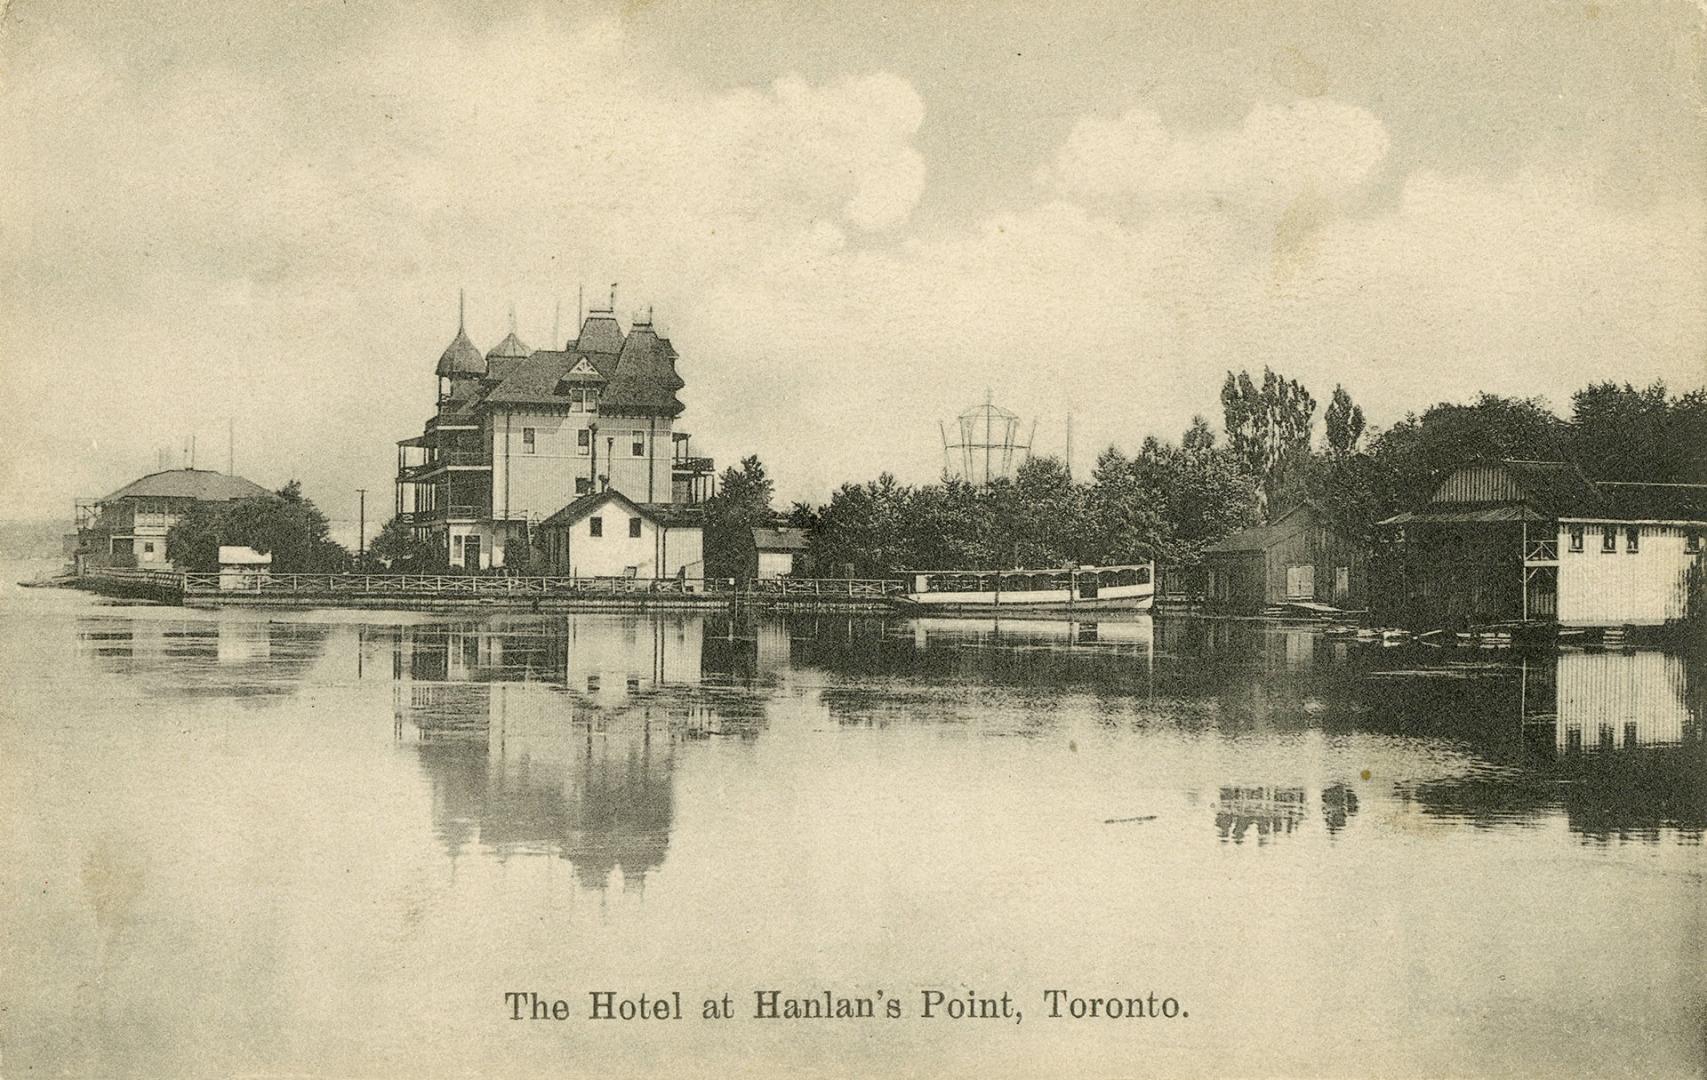 The Hotel at Hanlan's Point, Toronto